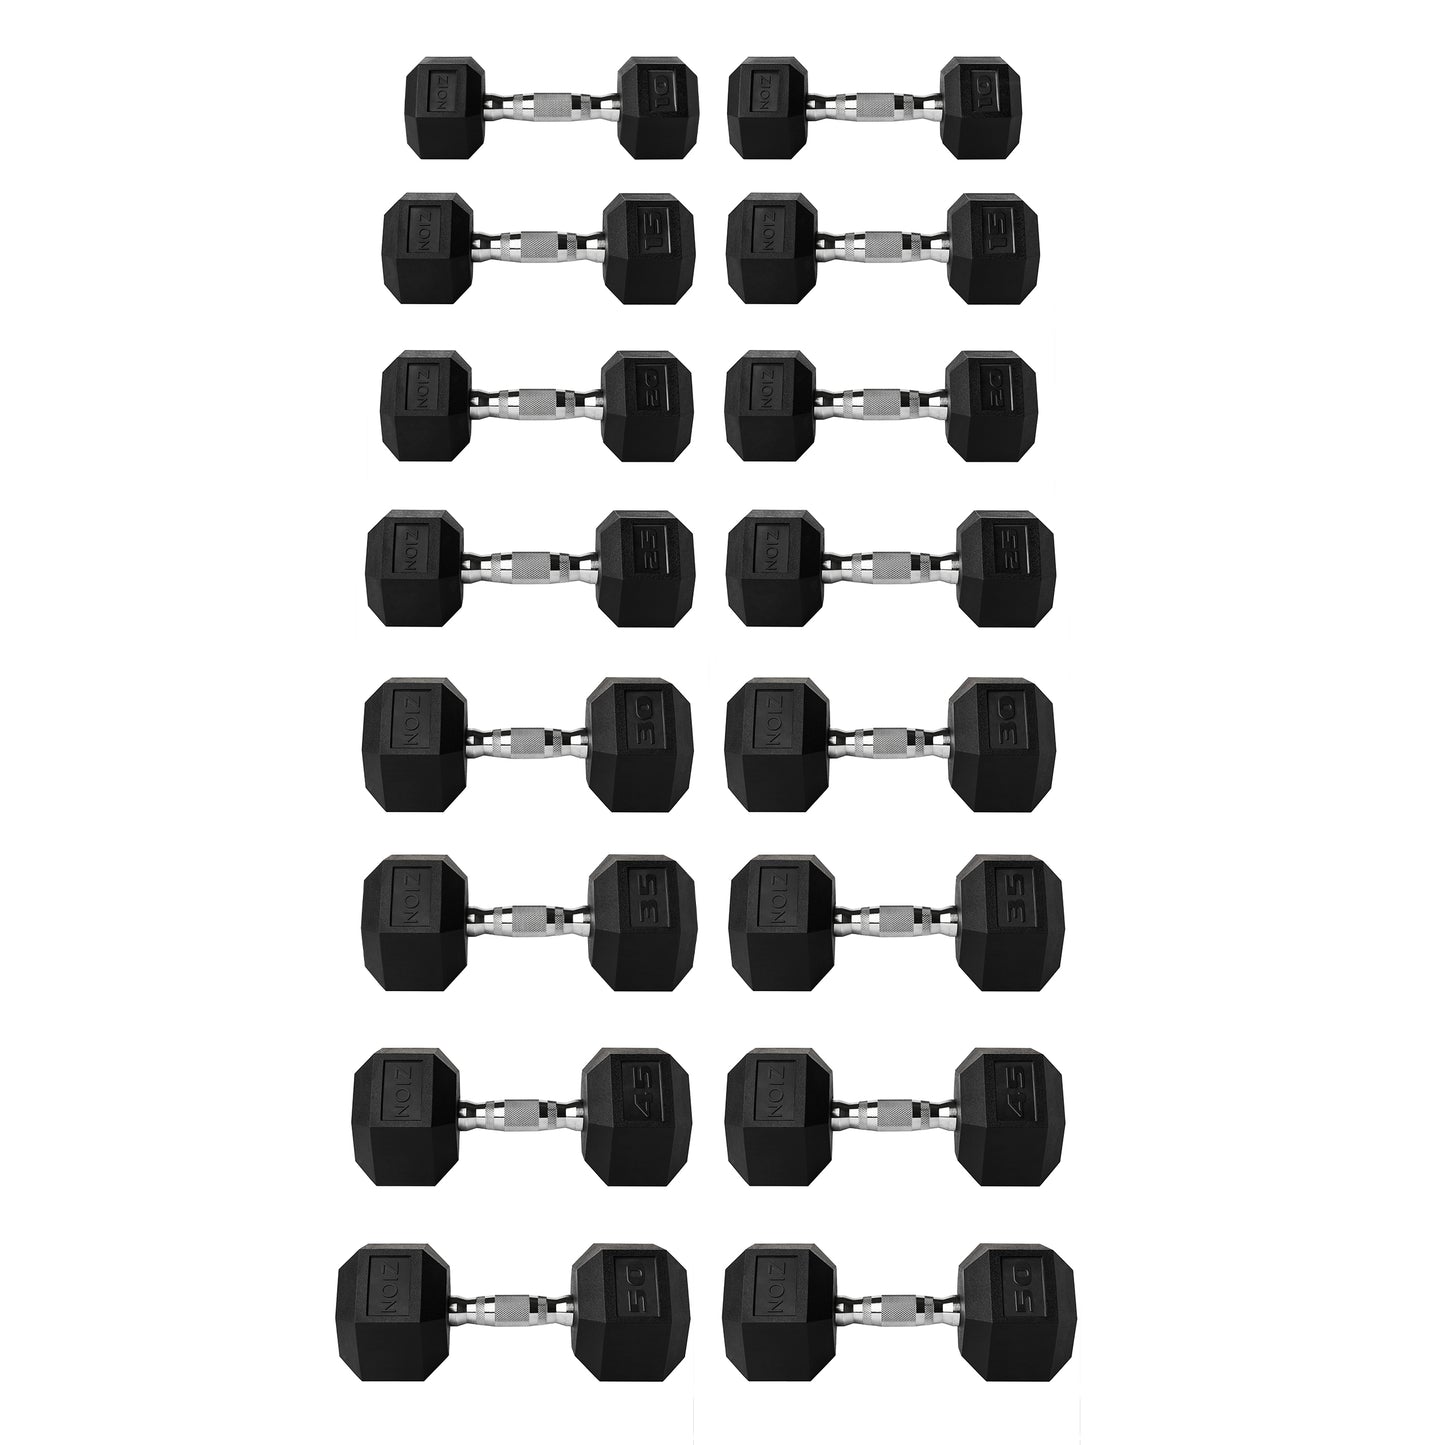 The Zeus 10-50 LB Rubber Hexagon Dumbbell Set